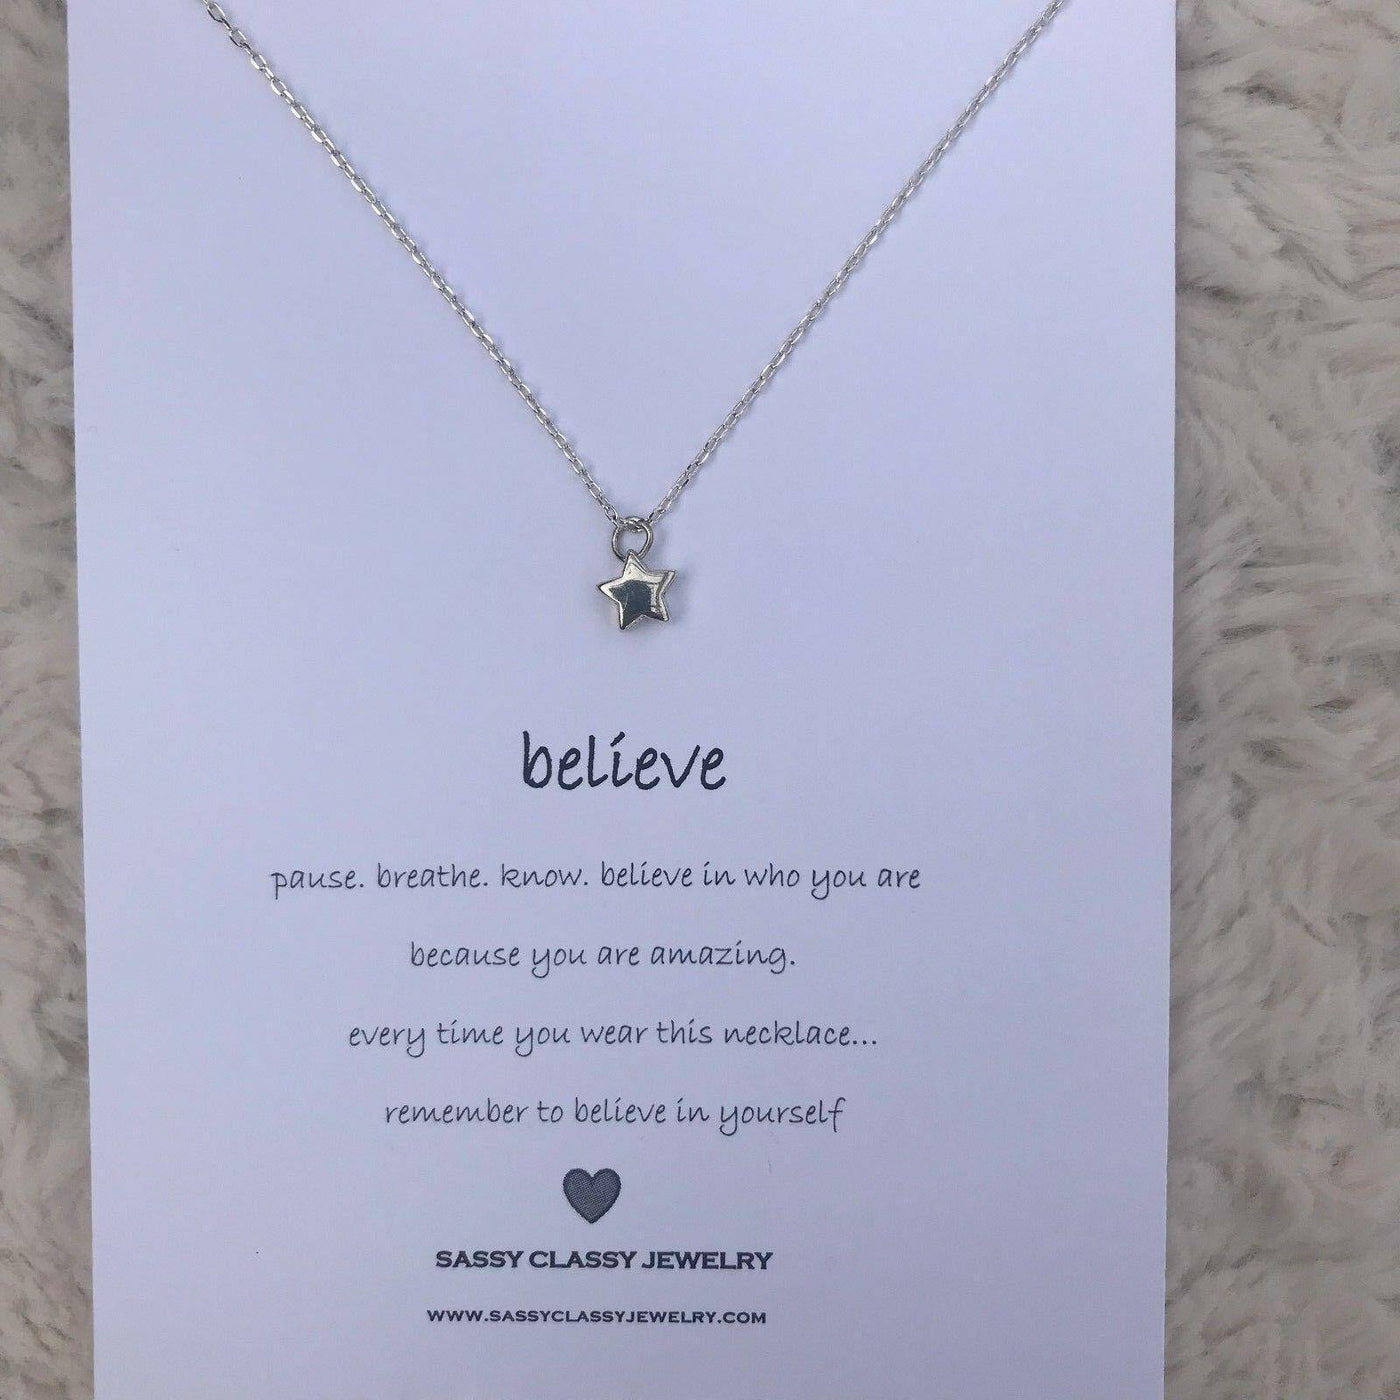 Silver Star Necklace with Believe Jewelry Card - Accessories - dalia + jade 